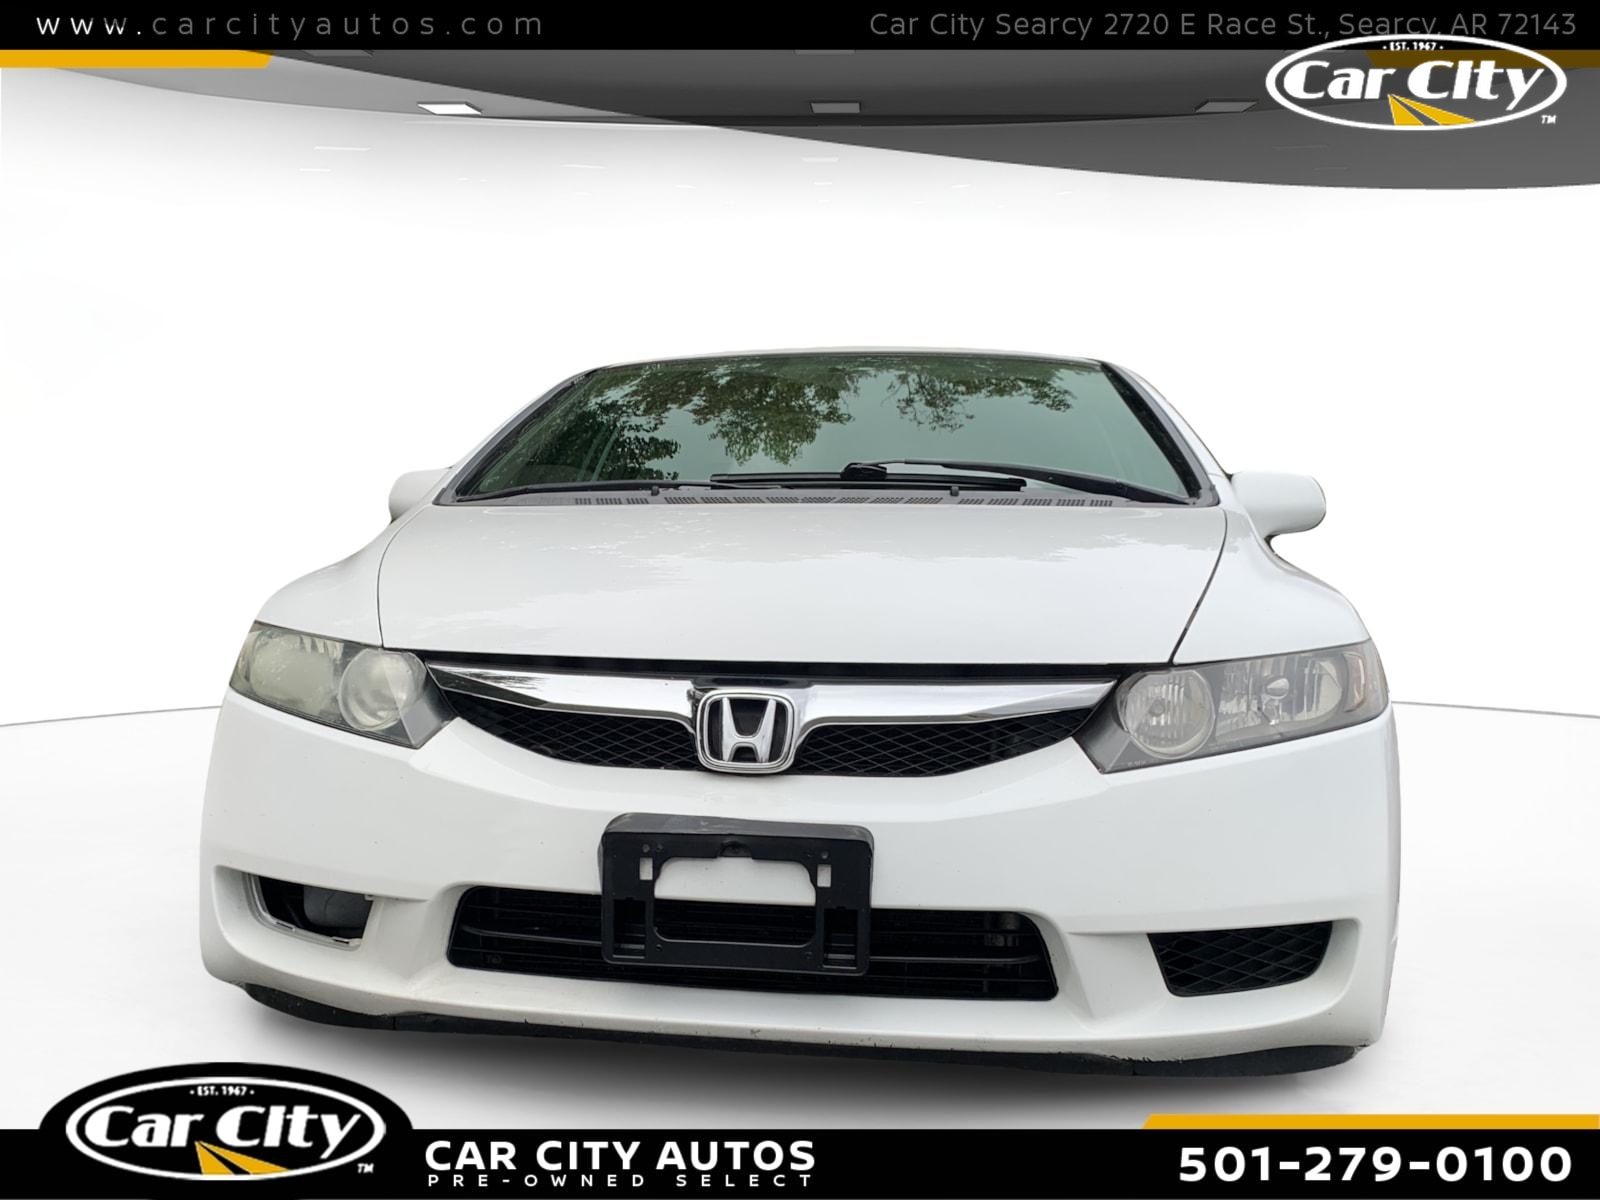 2009 Honda Civic EX-L  - 9H341029  - Car City Autos